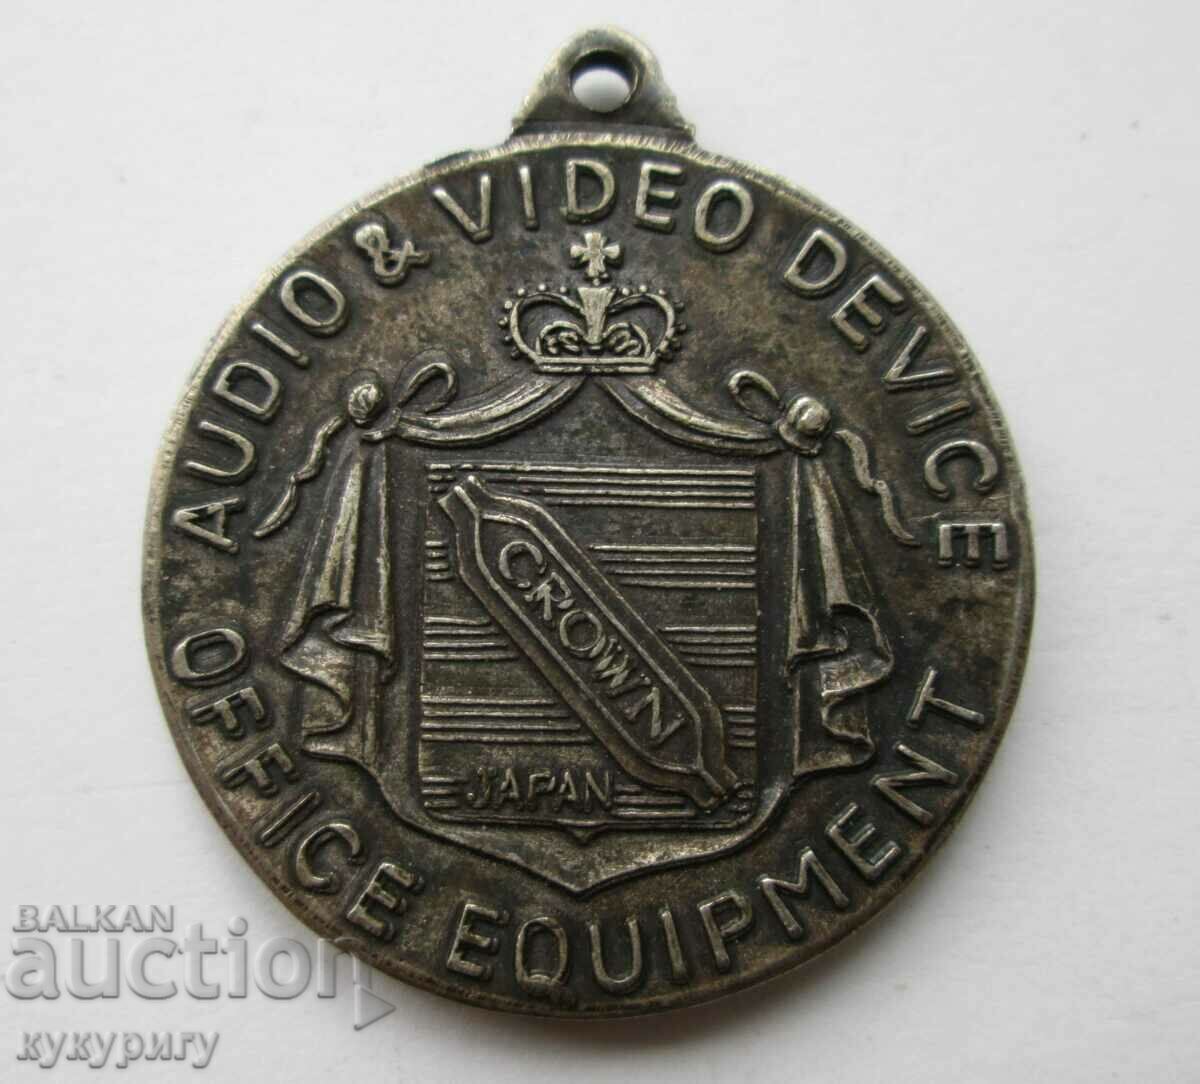 Old Silver Medal Crown Award